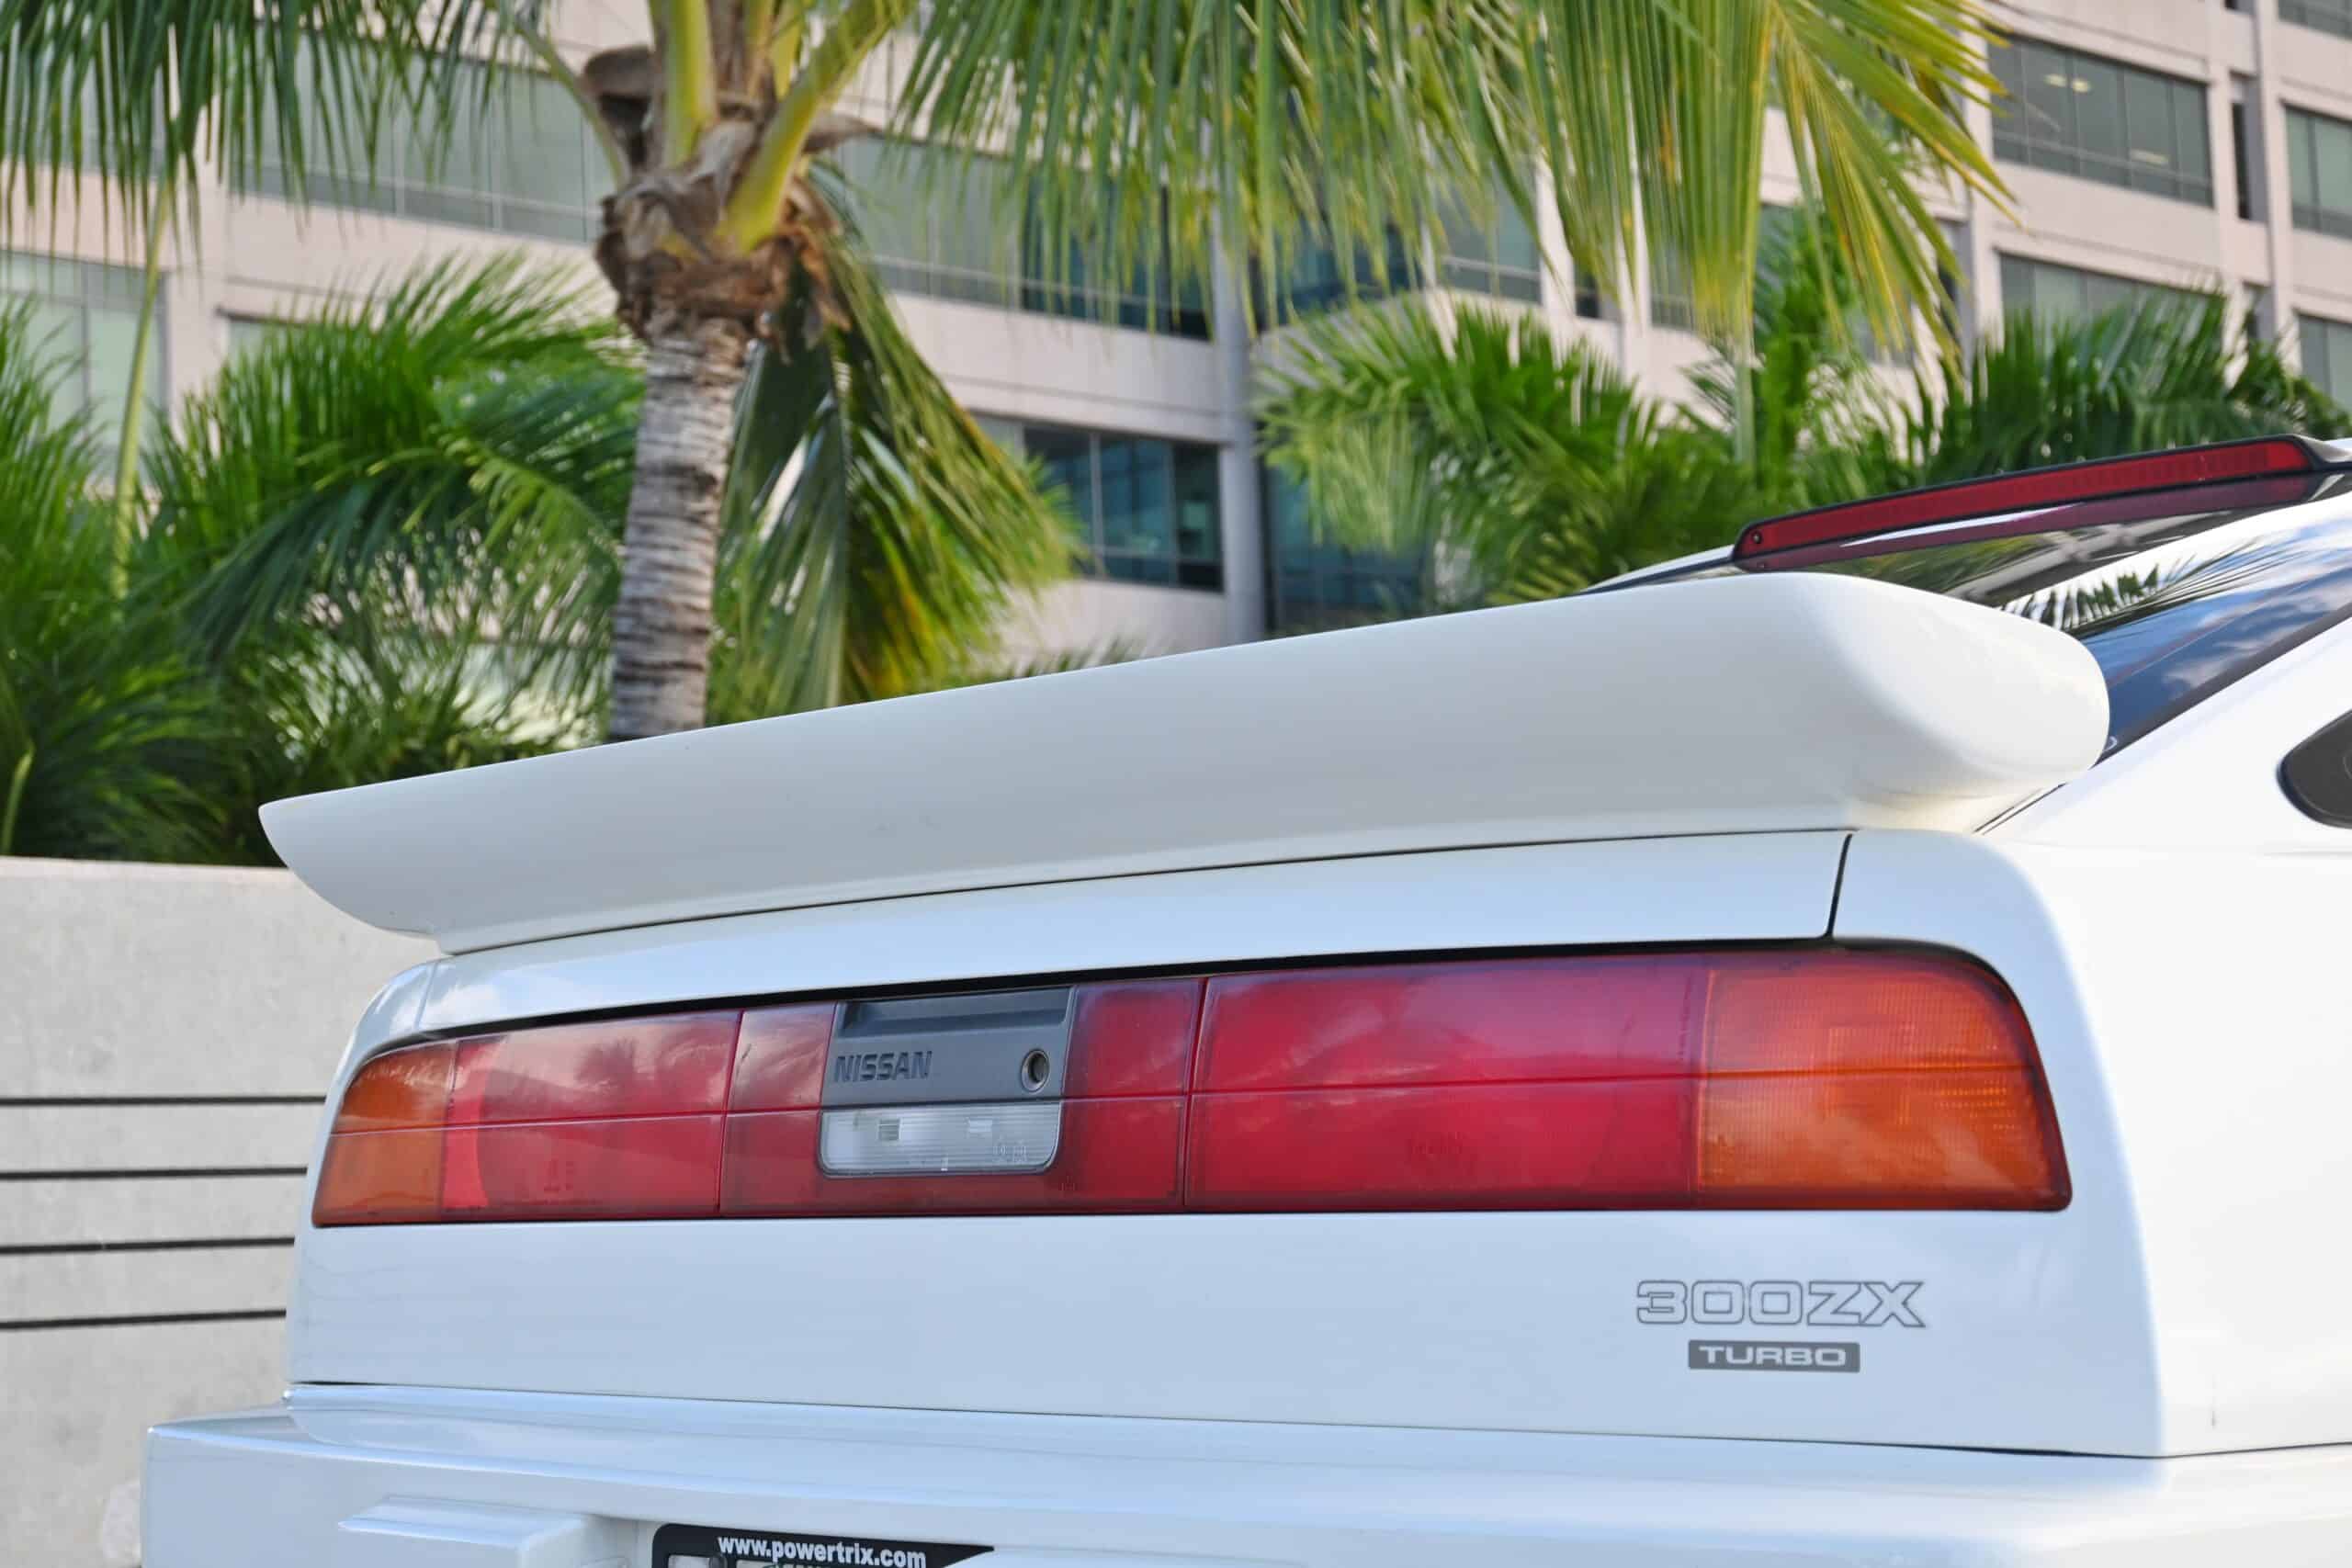 1988 Nissan 300ZX Turbo Shiro #797 Recaro Seats – Coilovers – BC Forged Wheels – Upgraded Turbo 300HP – Nice Mods